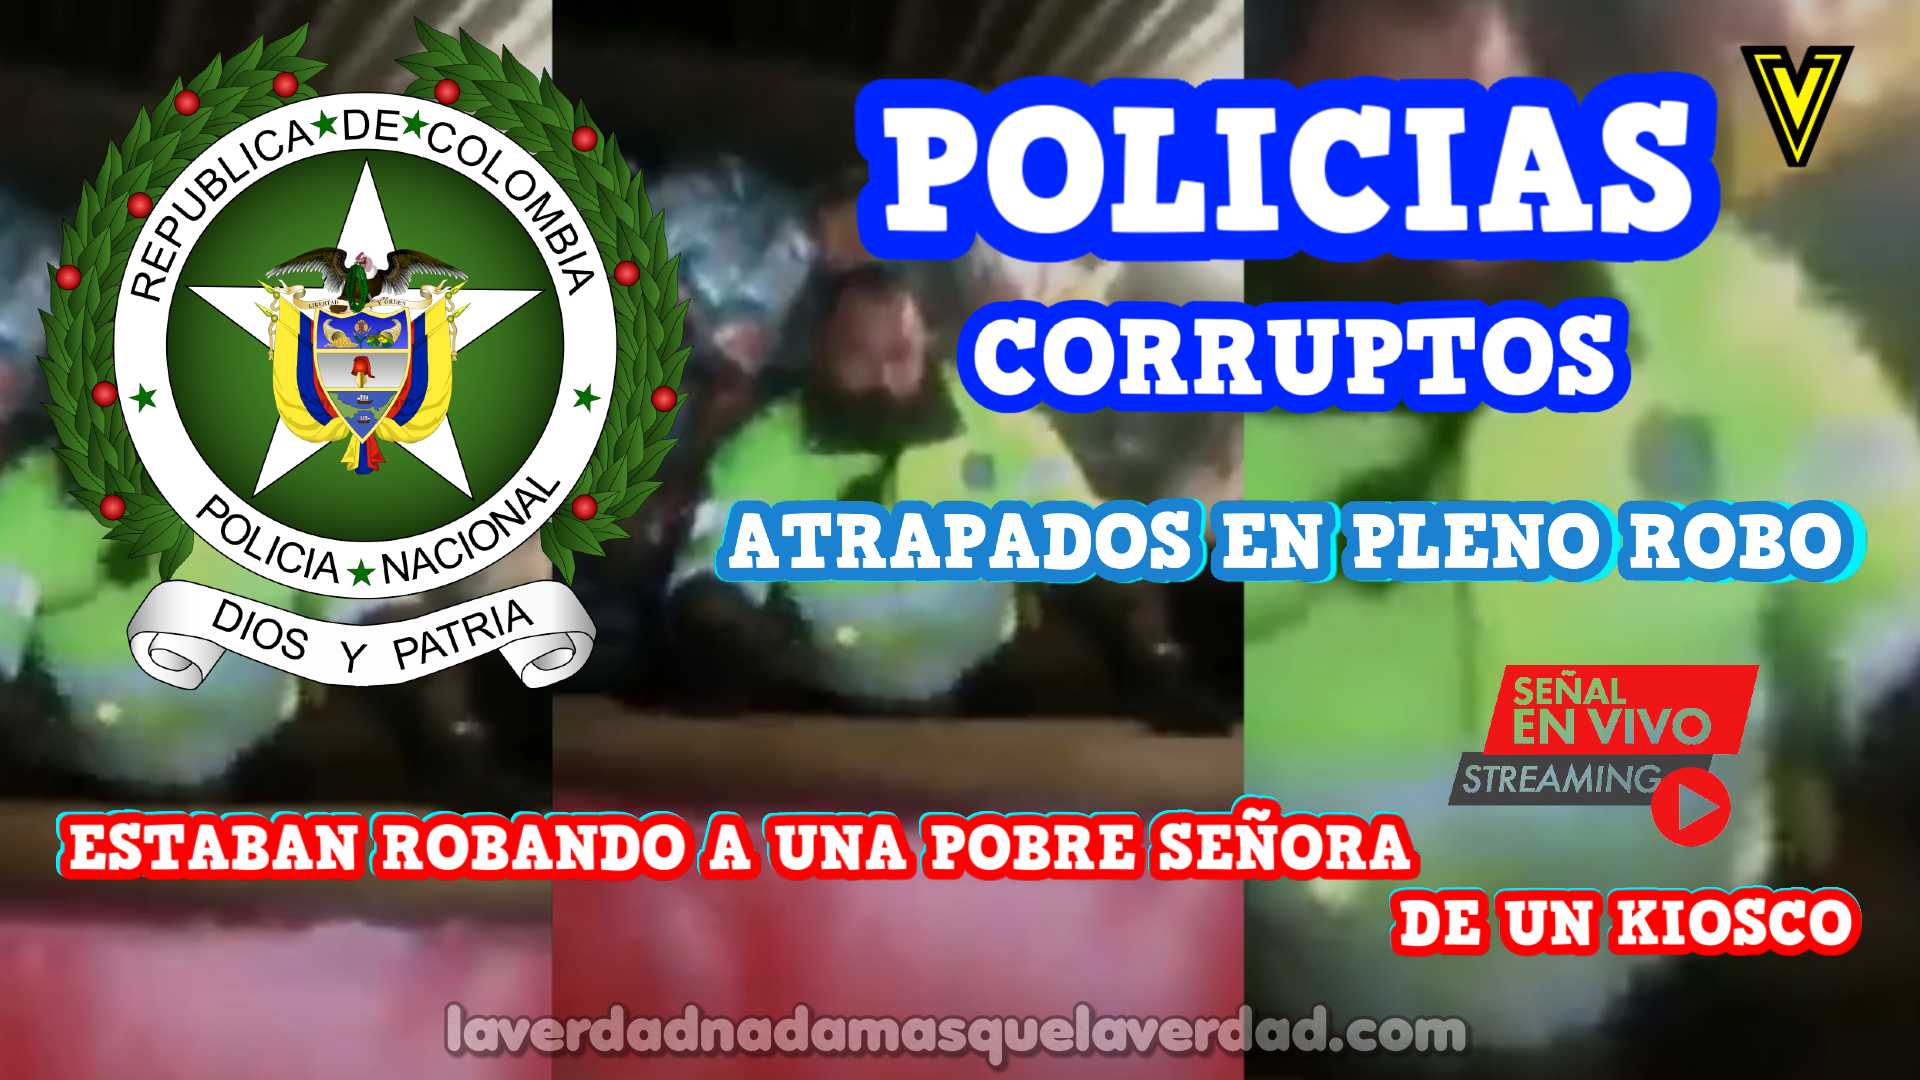 POLICIAS CORRUPTOS